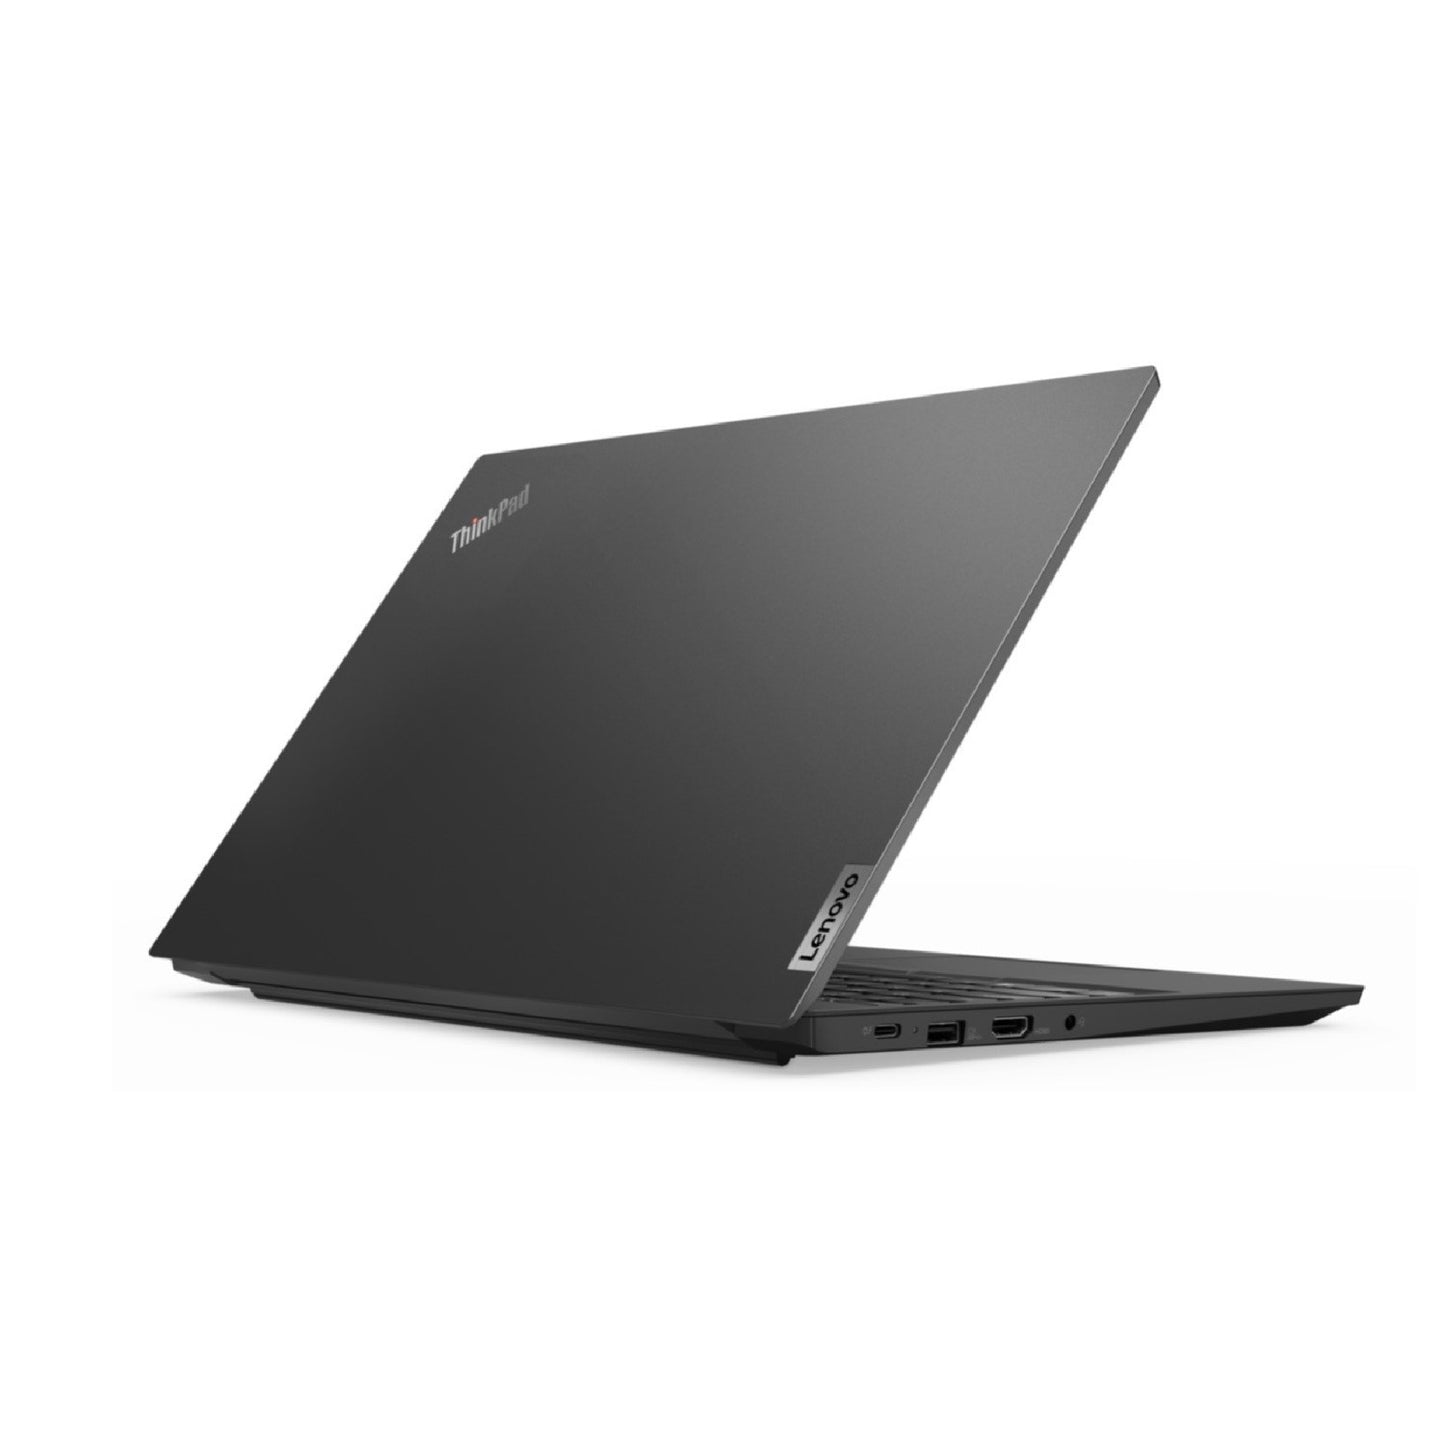 Lenovo ThinkPad E15 Laptop - Intel Core i7 11th Gen CPU - 16GB RAM - 1TB SSD